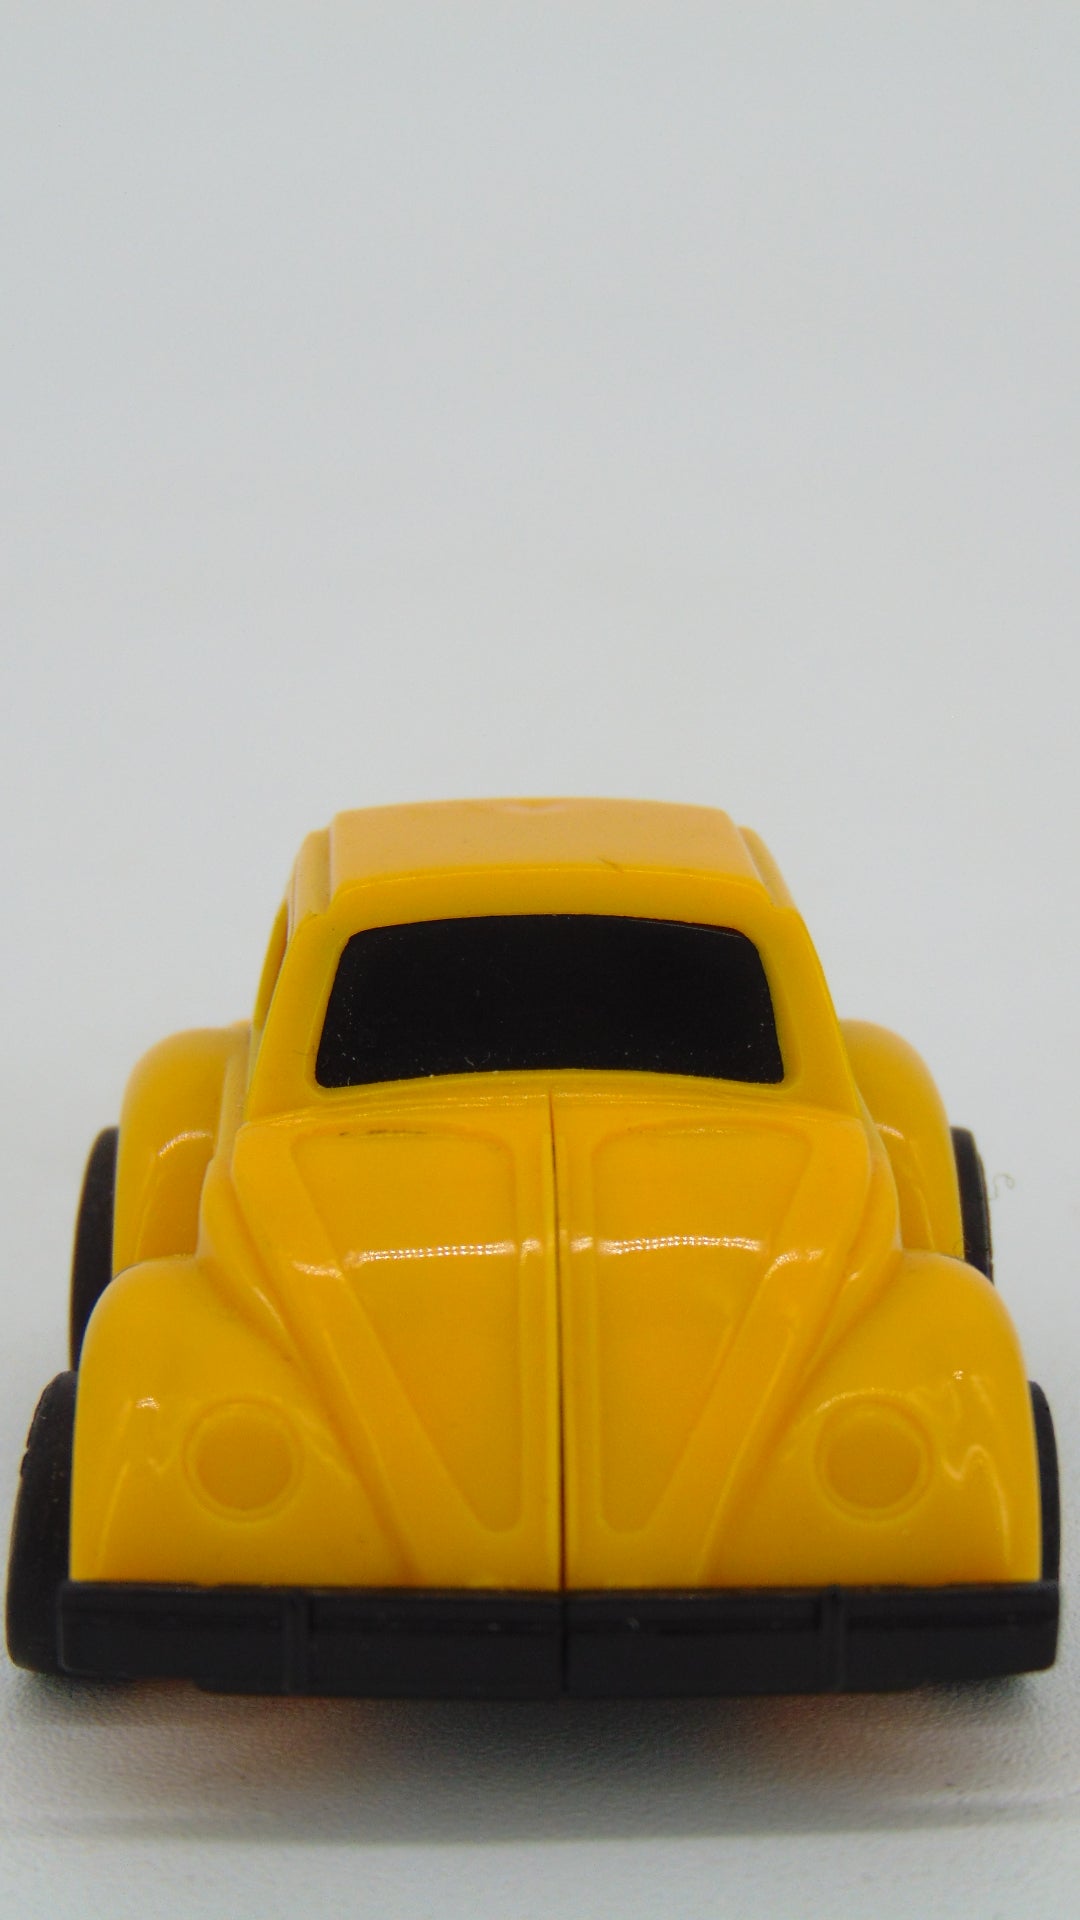 Transformers G1 Minibot Autobot Bumblebee LOOSE ARMS